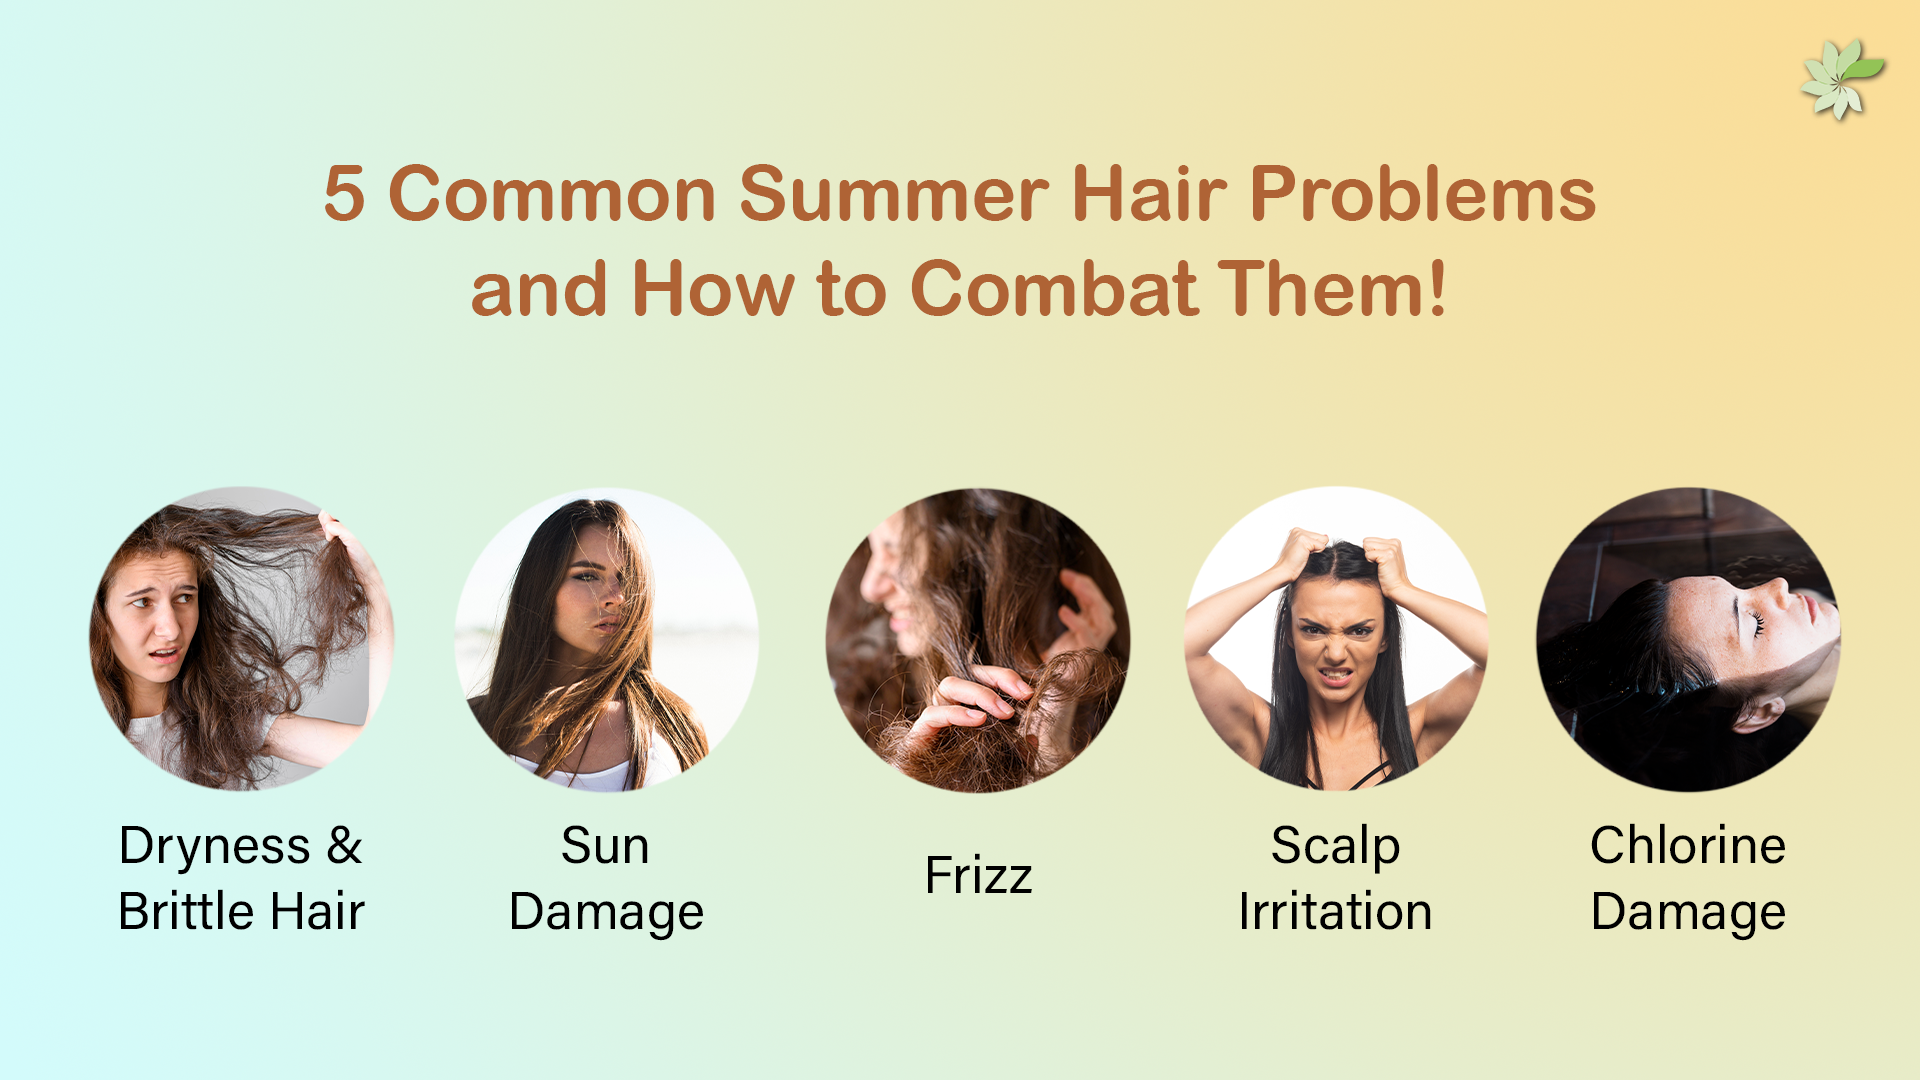  Common Summer Hair Problems like Dryness, Sun Damage, Frizz, Scalp Irritation, Chlorine Damage.